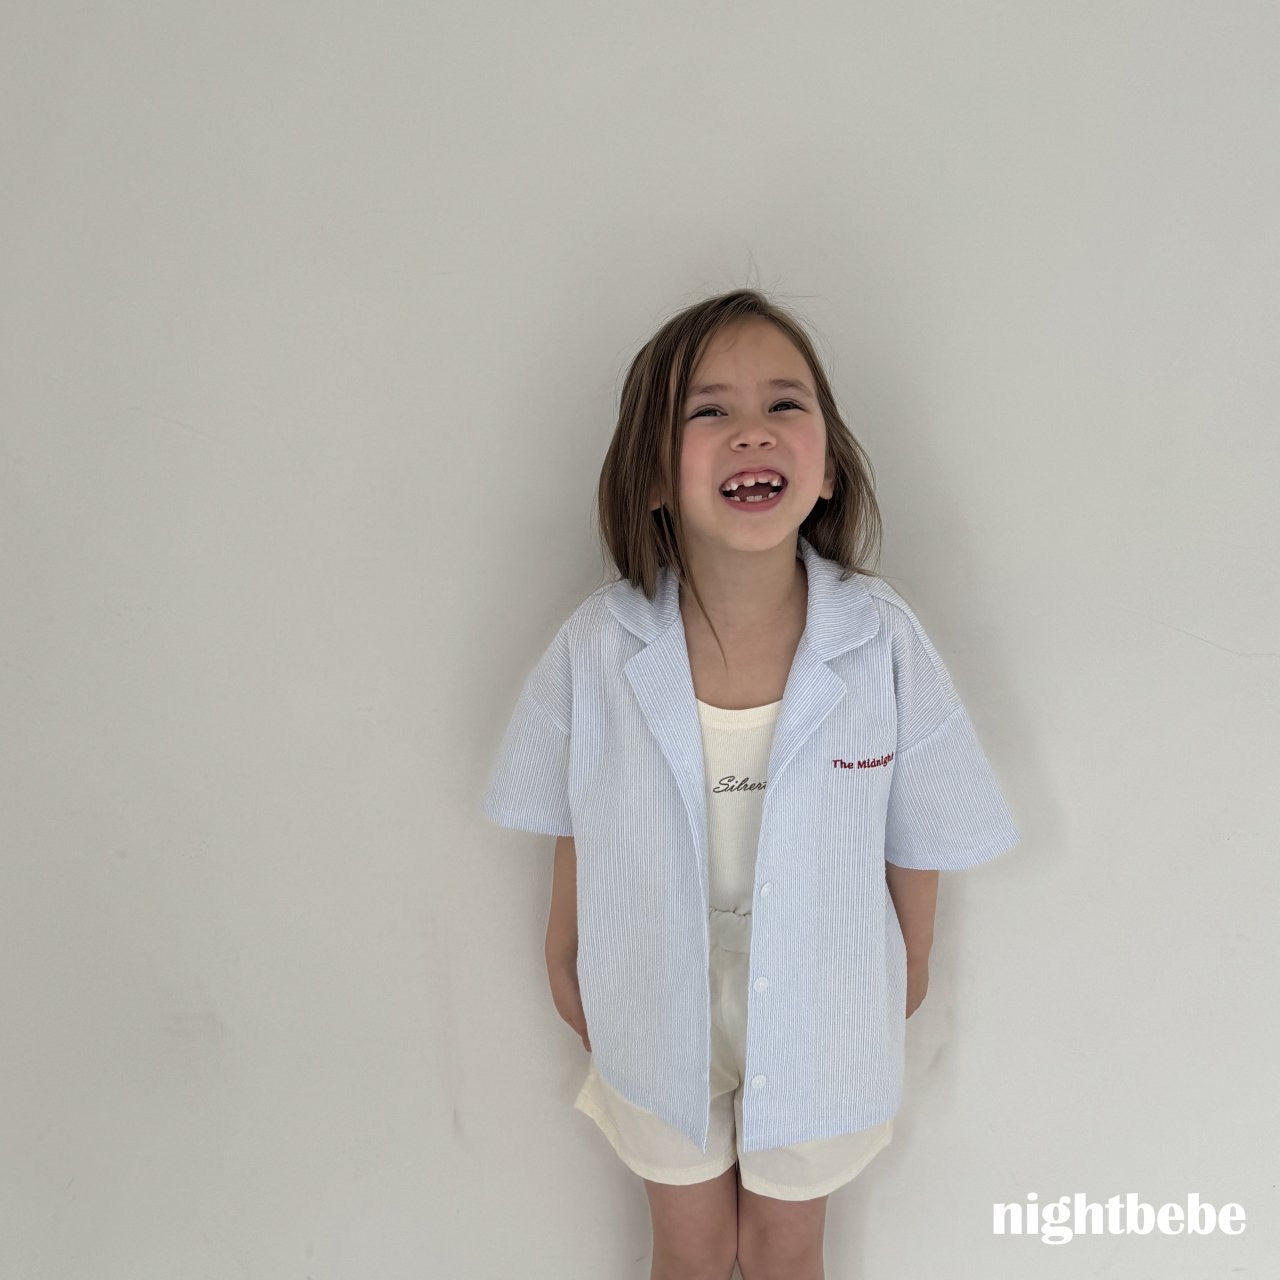 Nightbebe Mos sleeveless (kids 80-120cm)